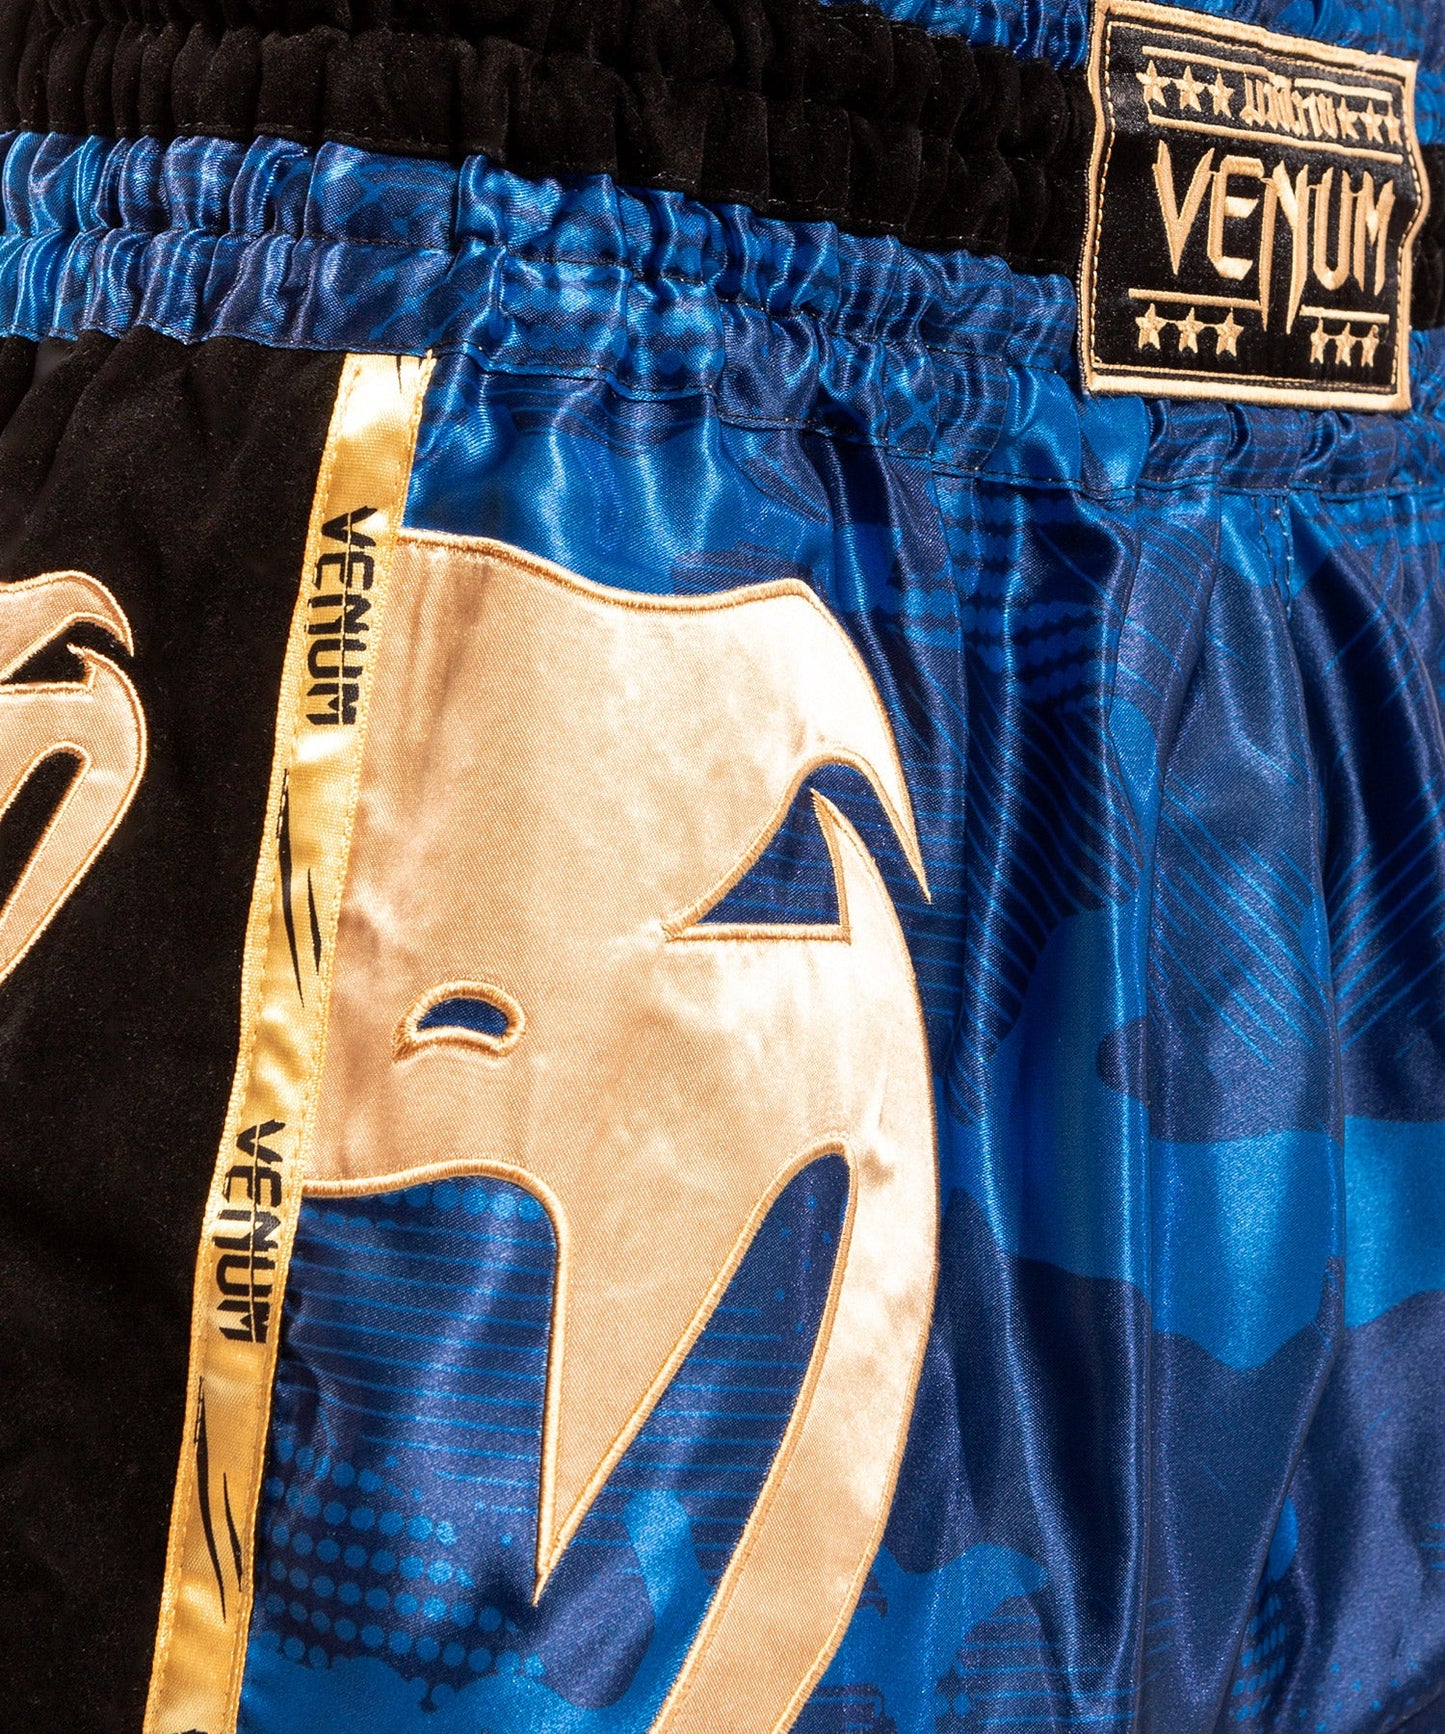 Venum Giant Camo Muay Thai Shorts - Blue/Gold